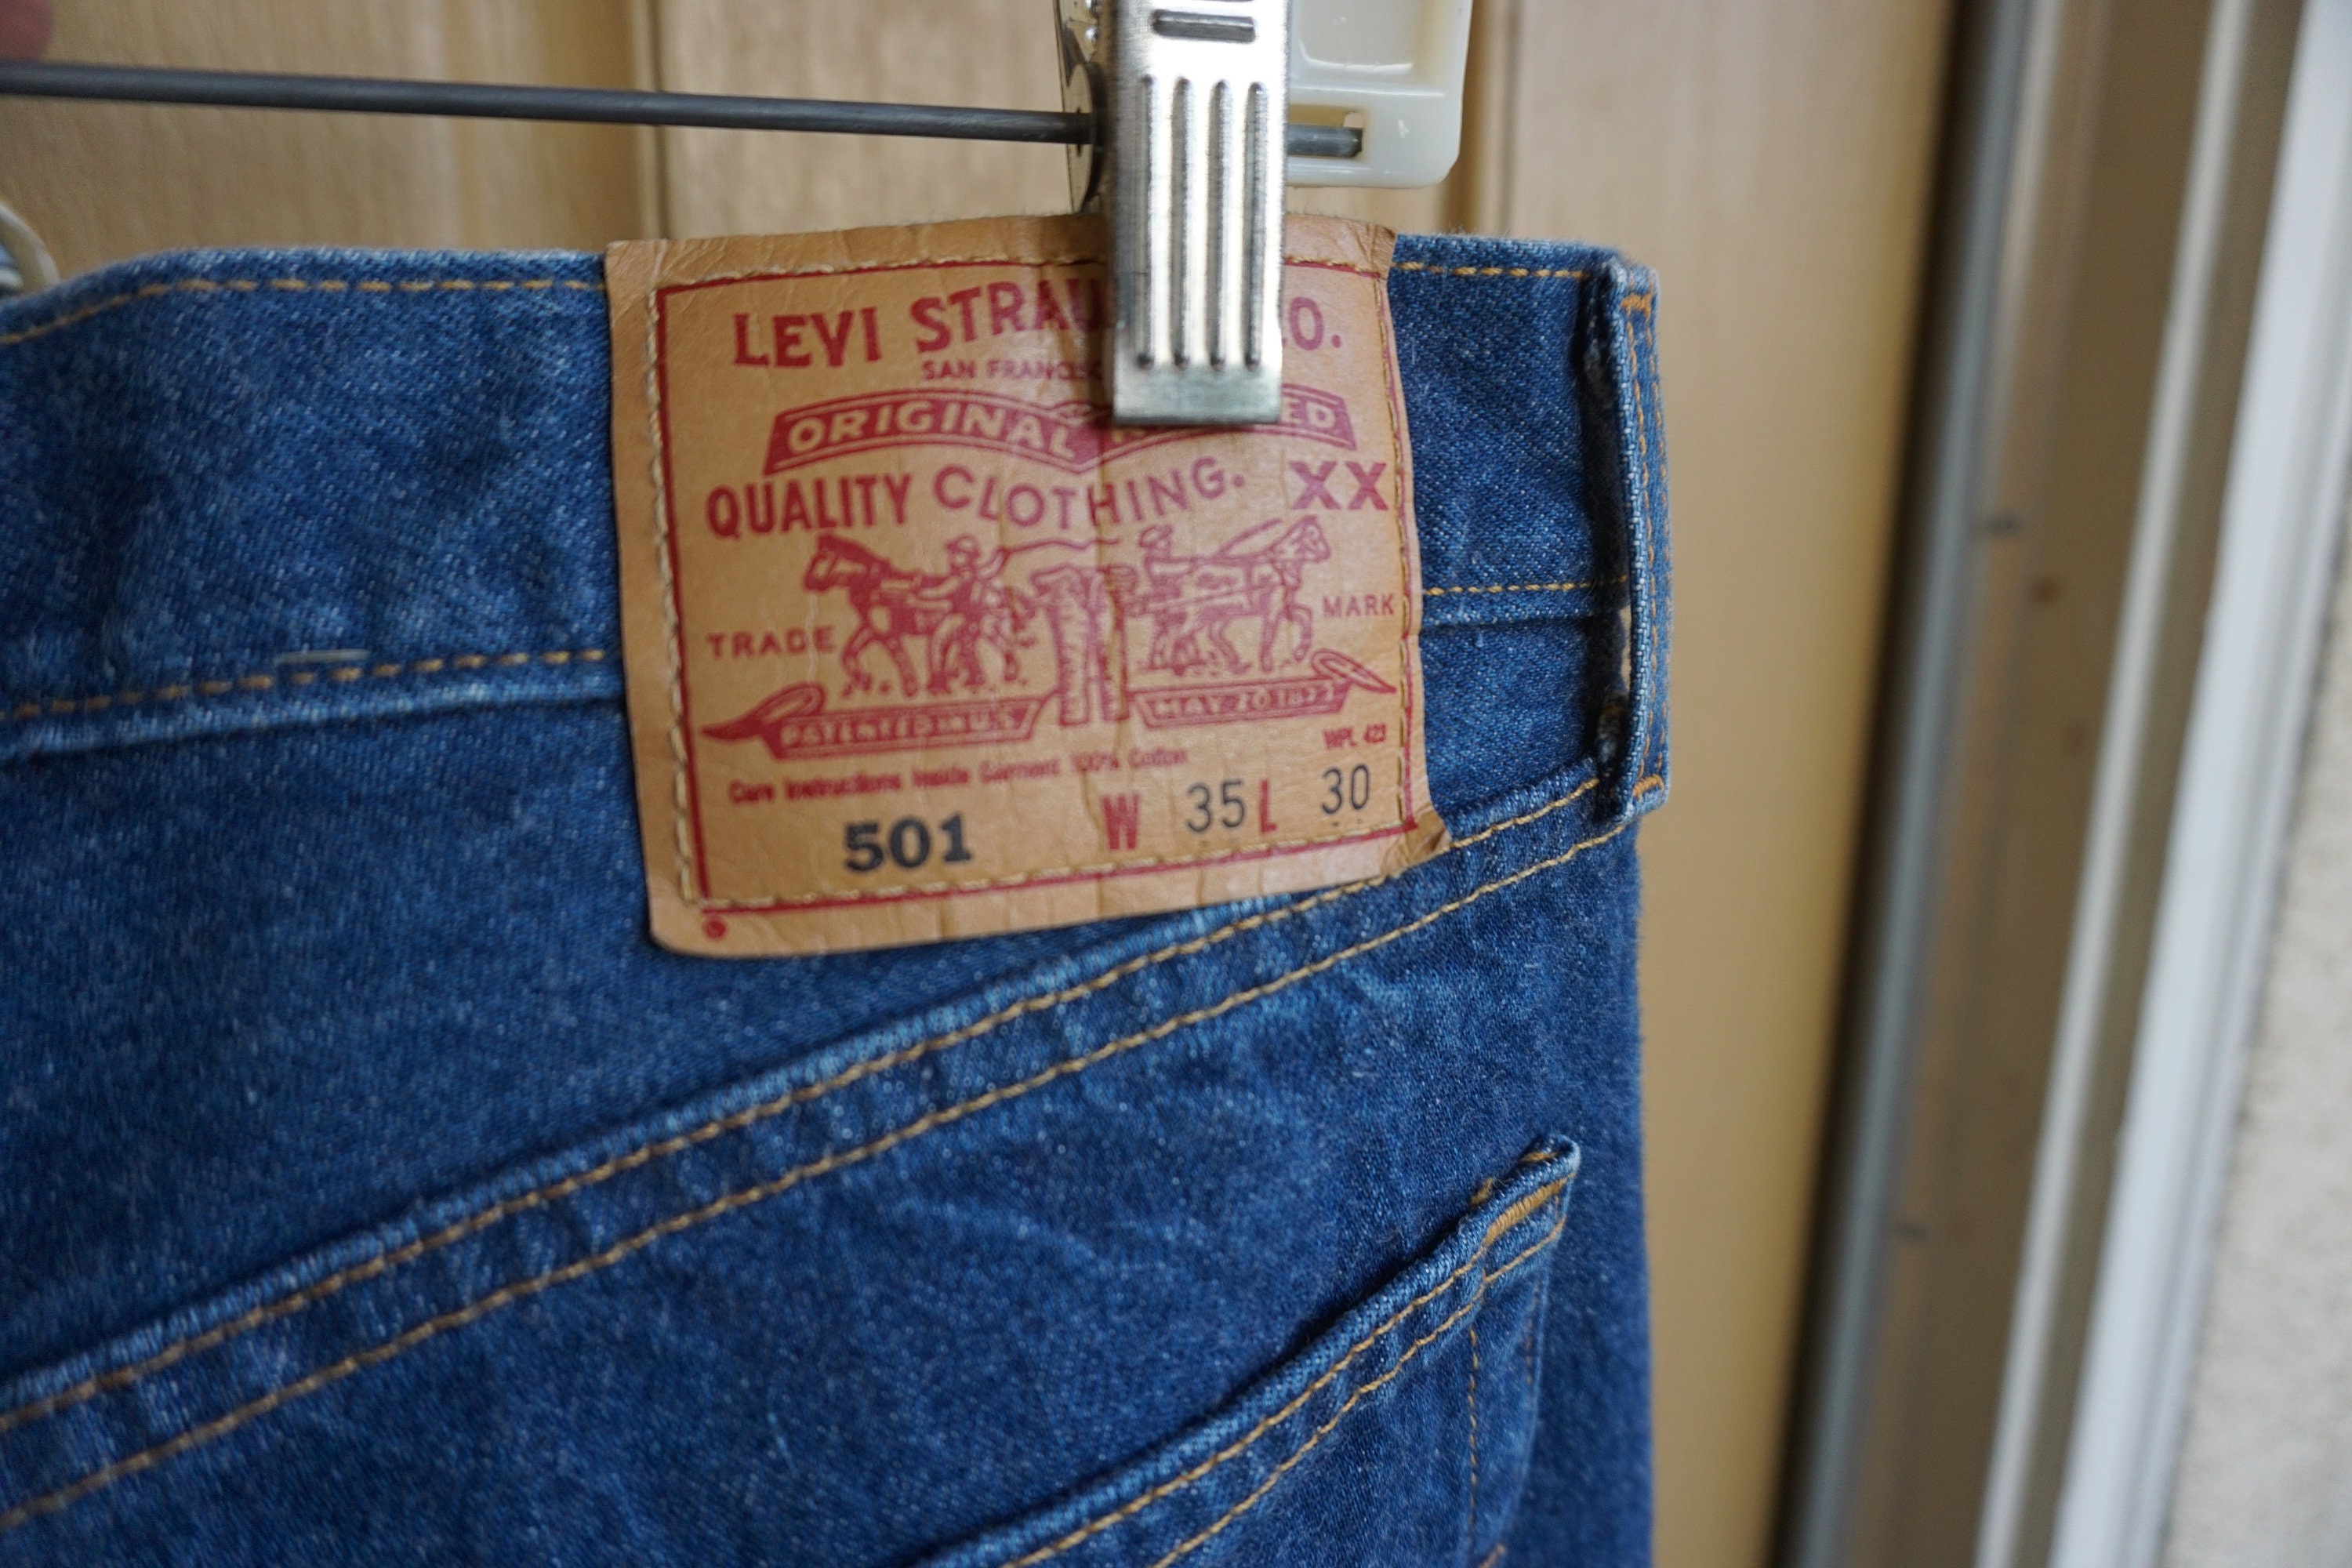 35 X 30 501's WPL 423 Levi's Denim Jeans Size 35 X 30 - Etsy